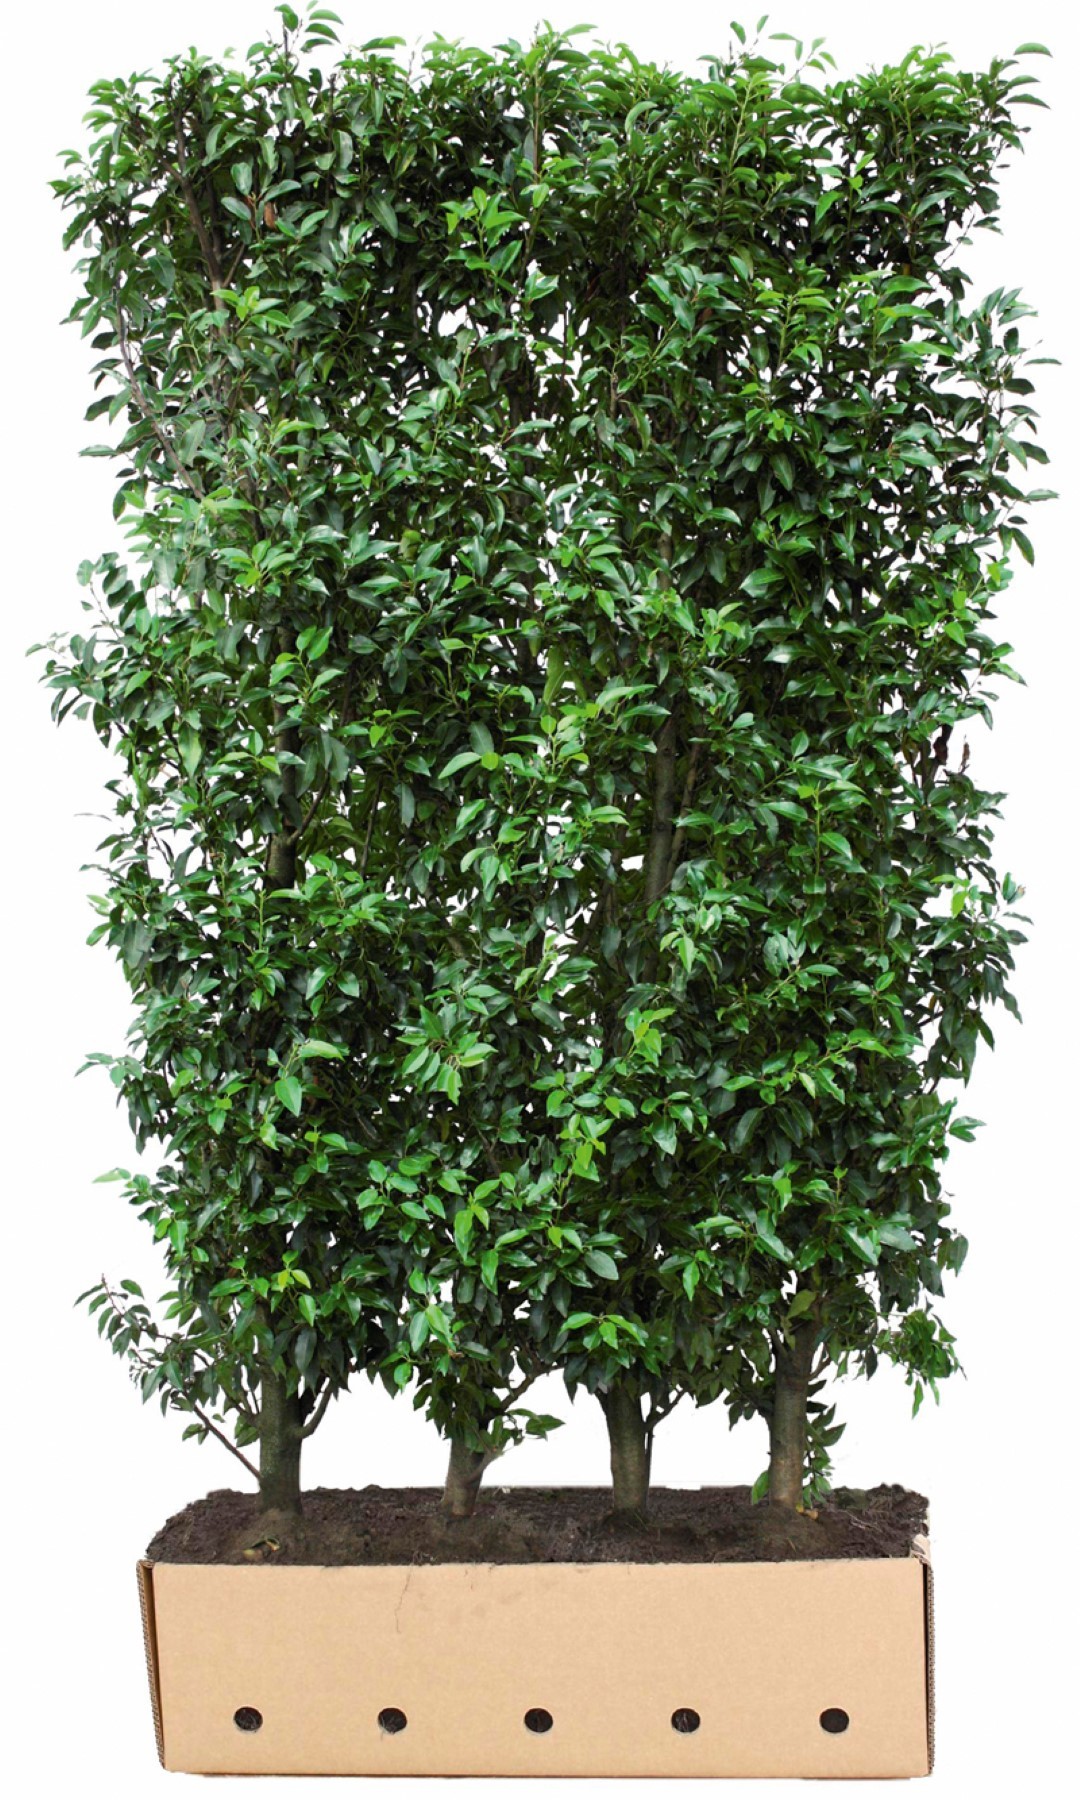 Kant & klaar haag Prunus lusitanica Angustifolia 150 x 100 cm breed